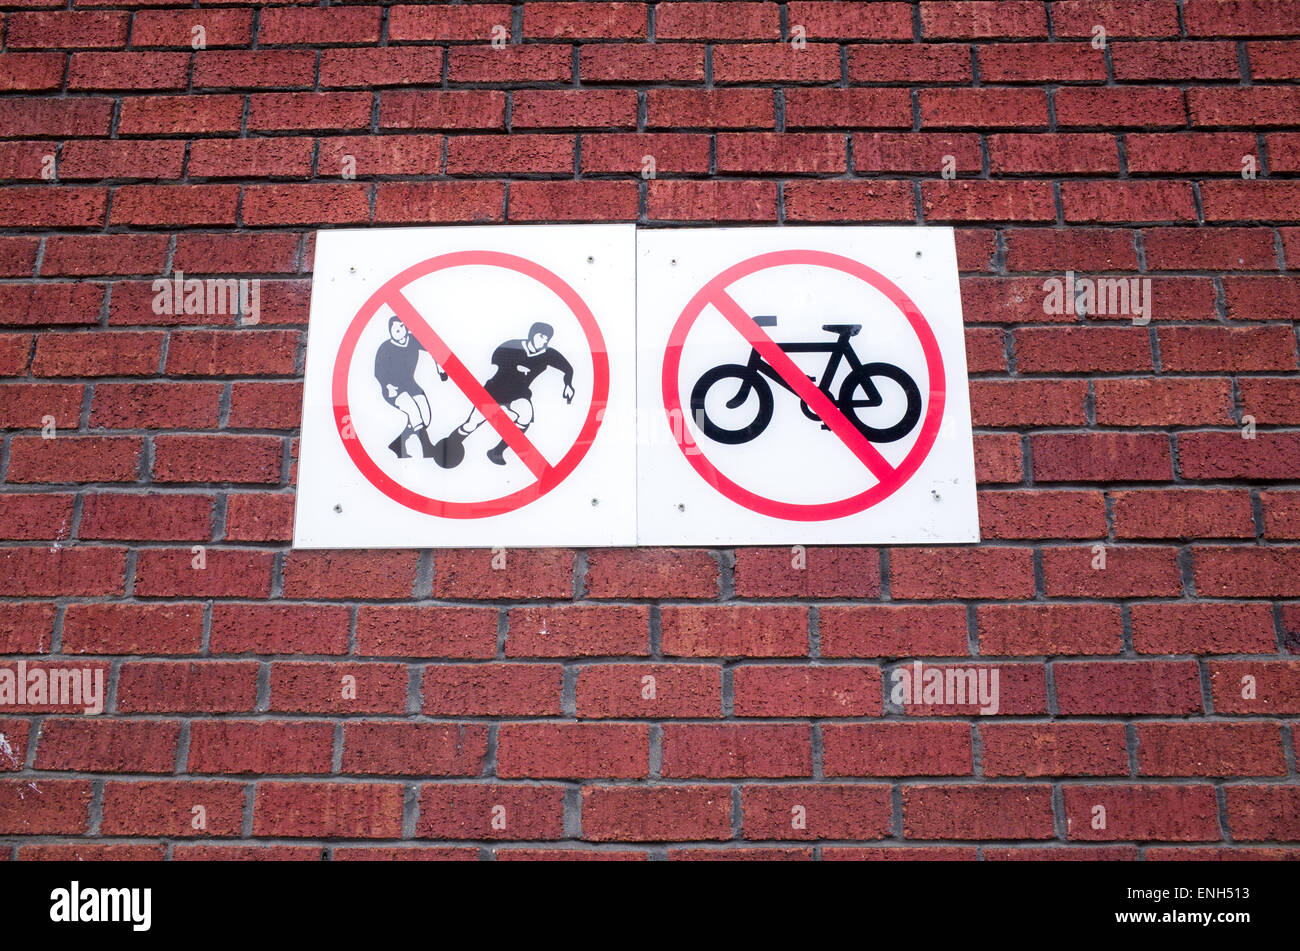 No cycling or ball games signs on a brick wall at a council housing estate, UK Stock Photo